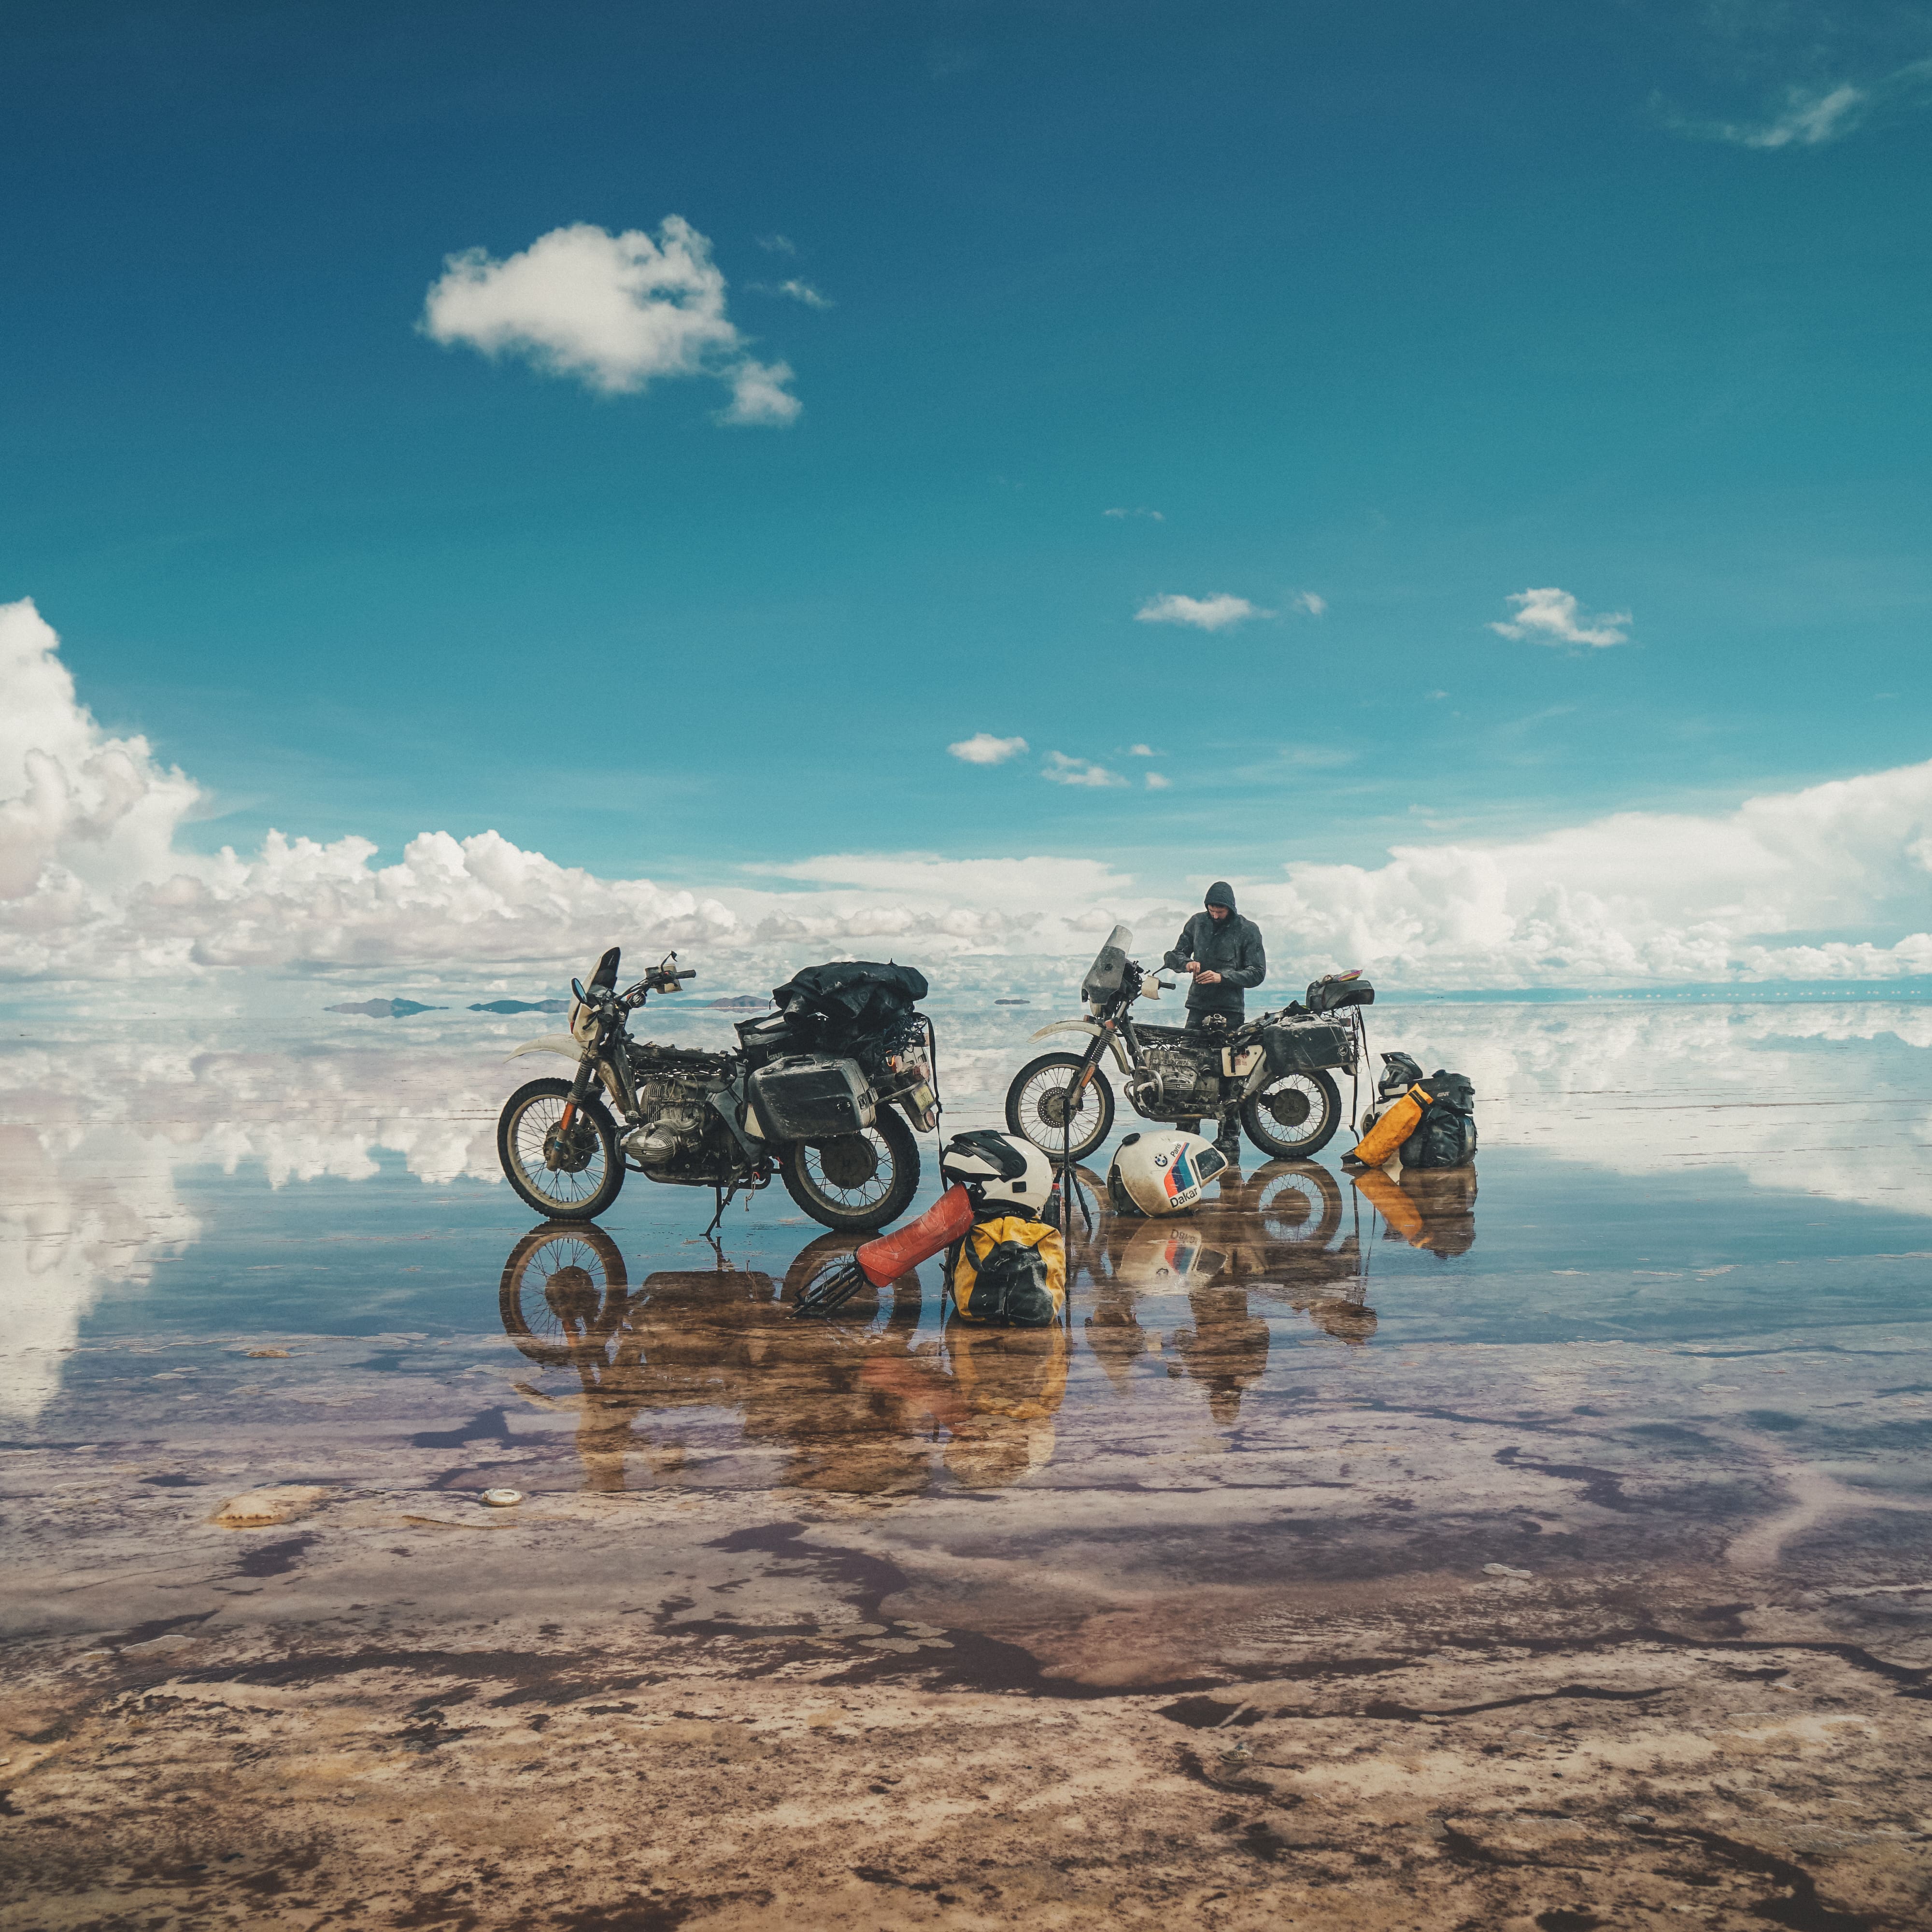 An image shot in Uyuni, Bolivia featured in 